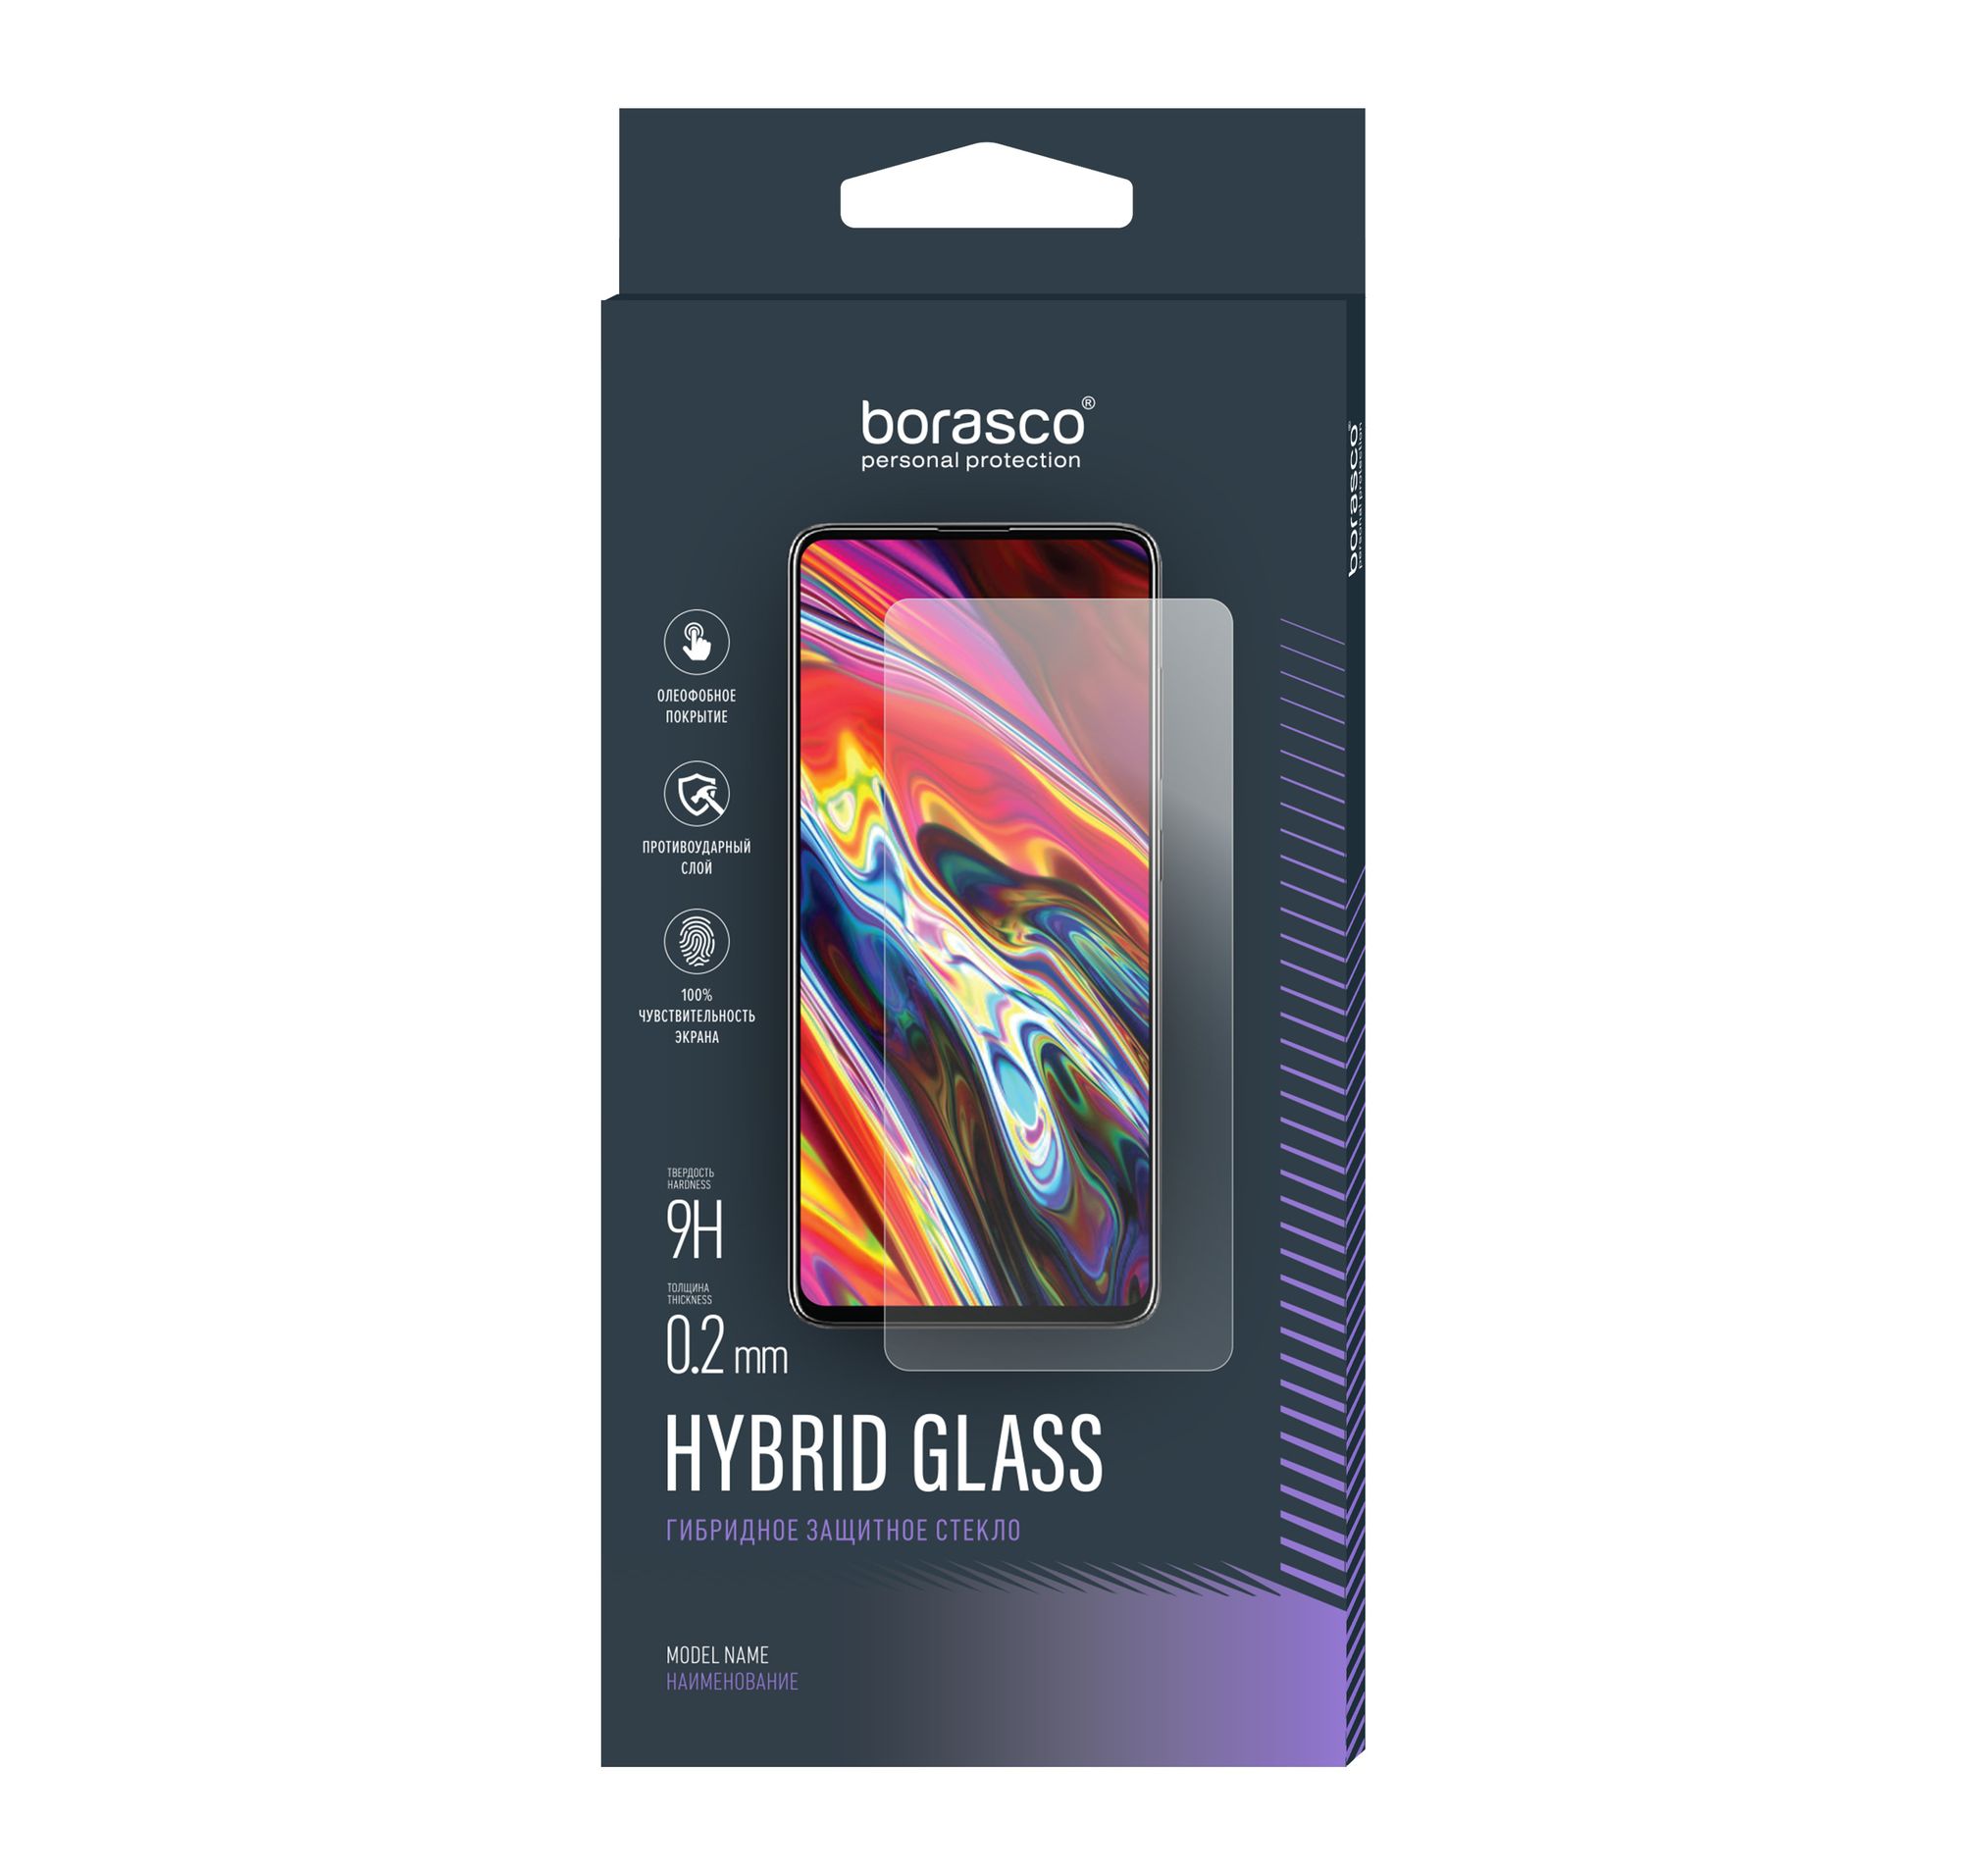 Стекло защитное Hybrid Glass VSP 0,26 мм для LG X Power защитное стекло gecko для lg x cam 0 26mm zs26 glgxcam